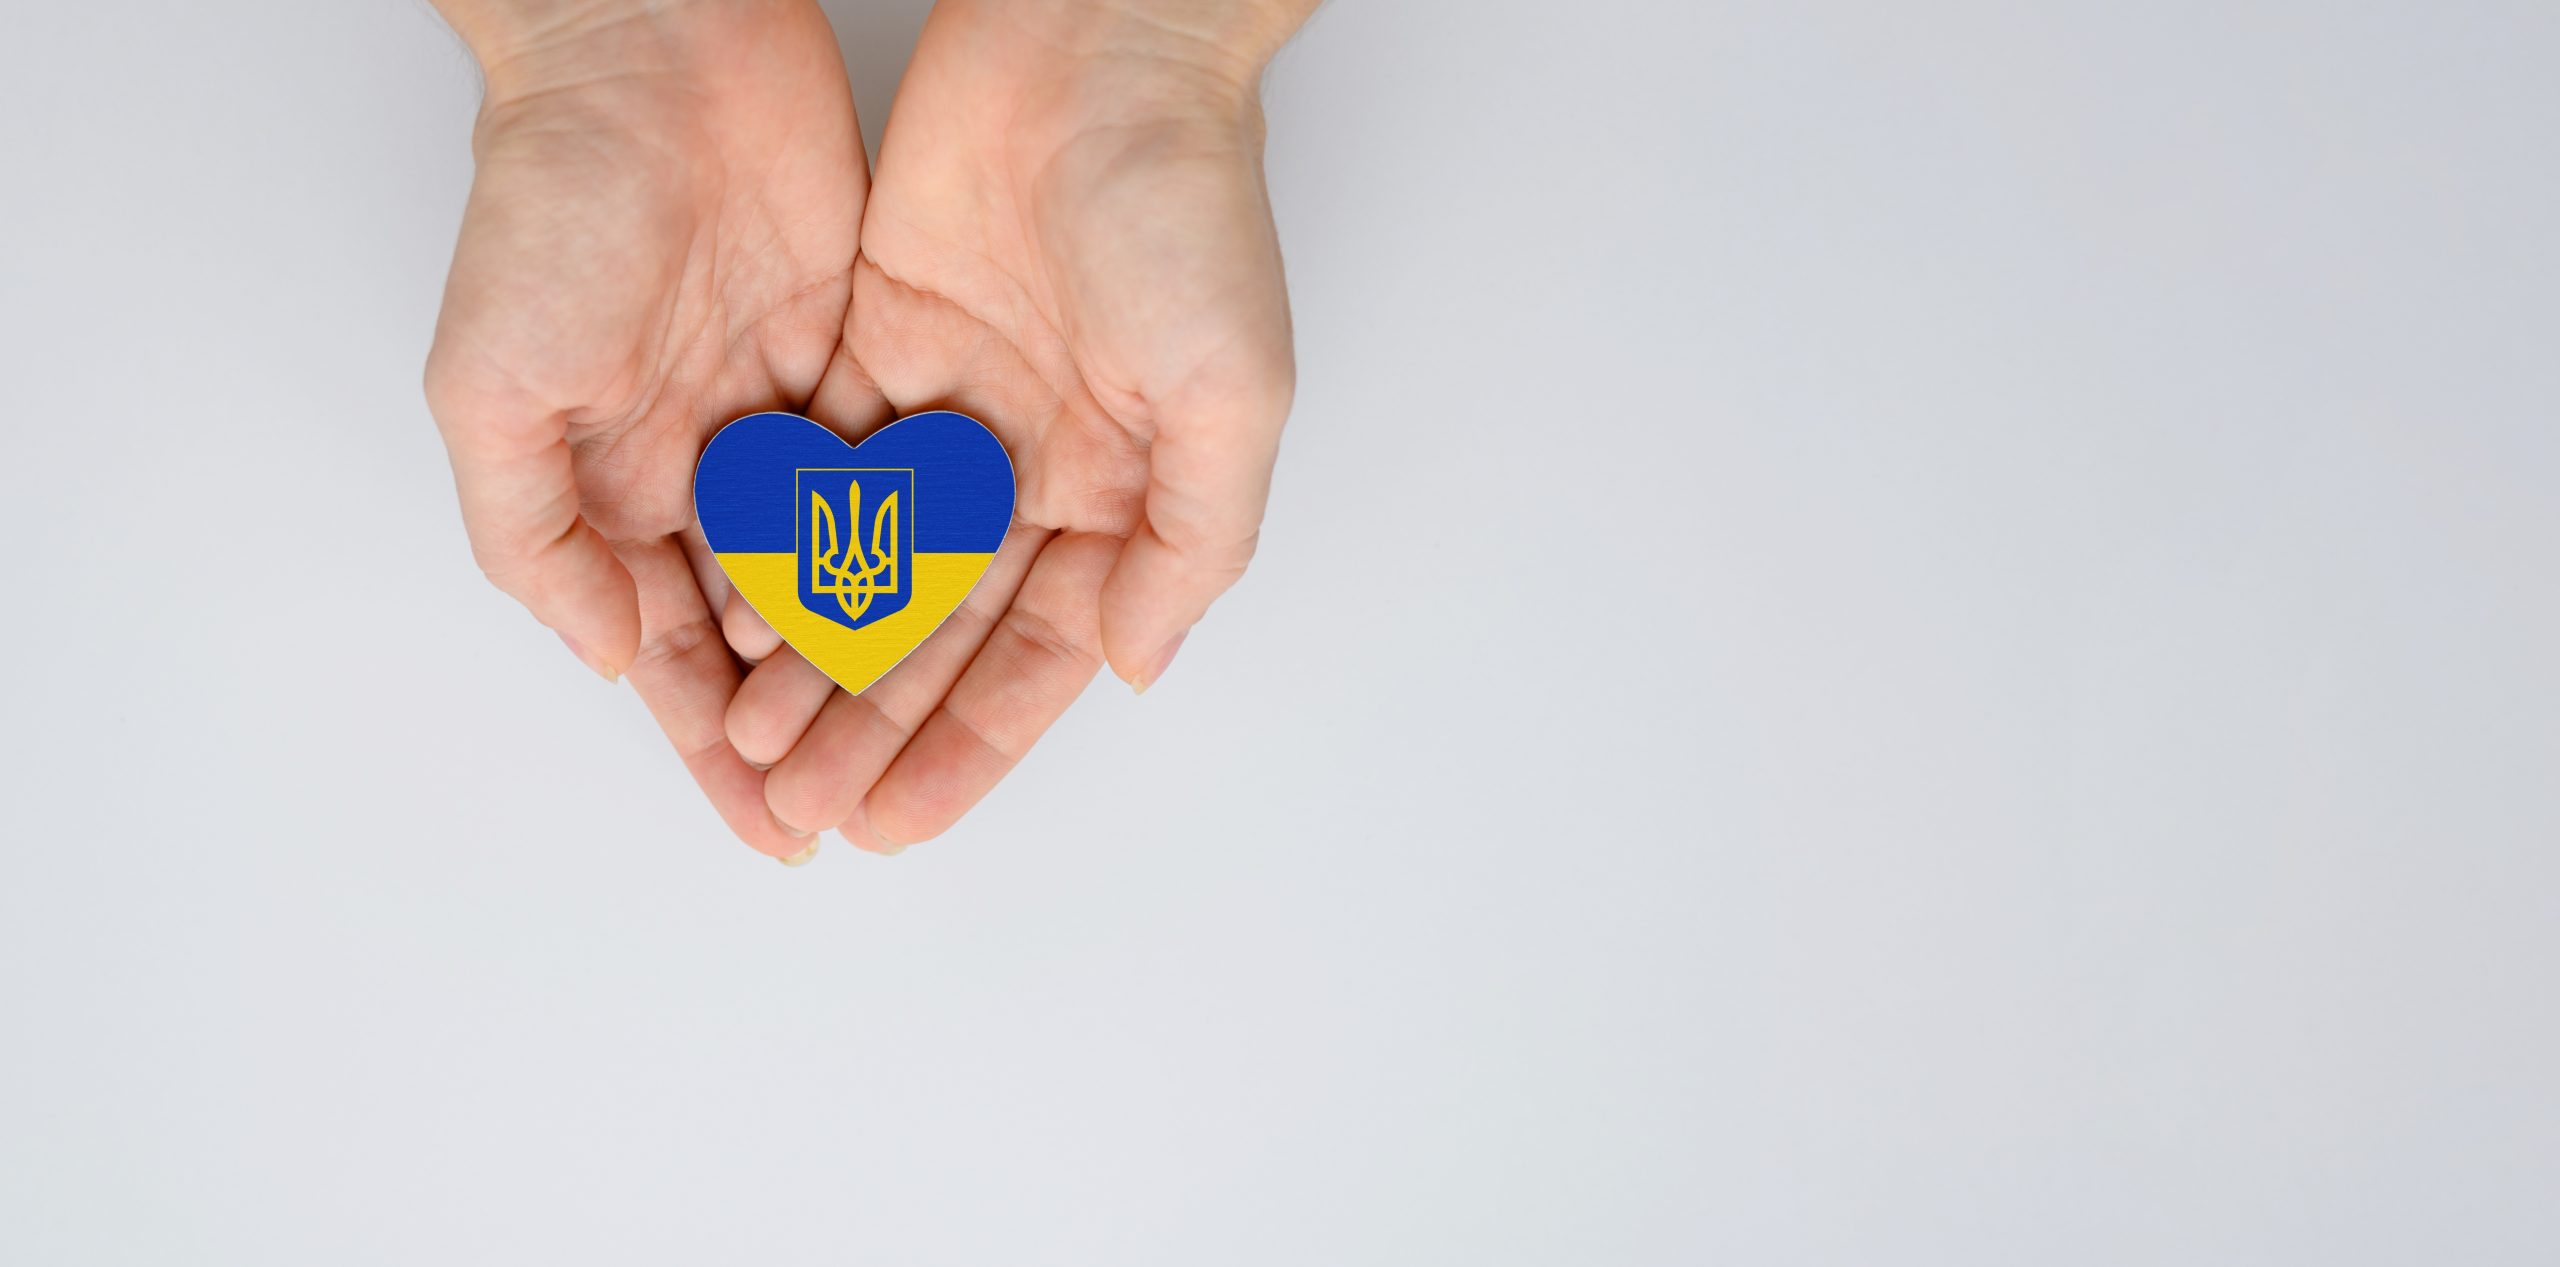 BVA offers free membership to Ukrainian vets moving to UK